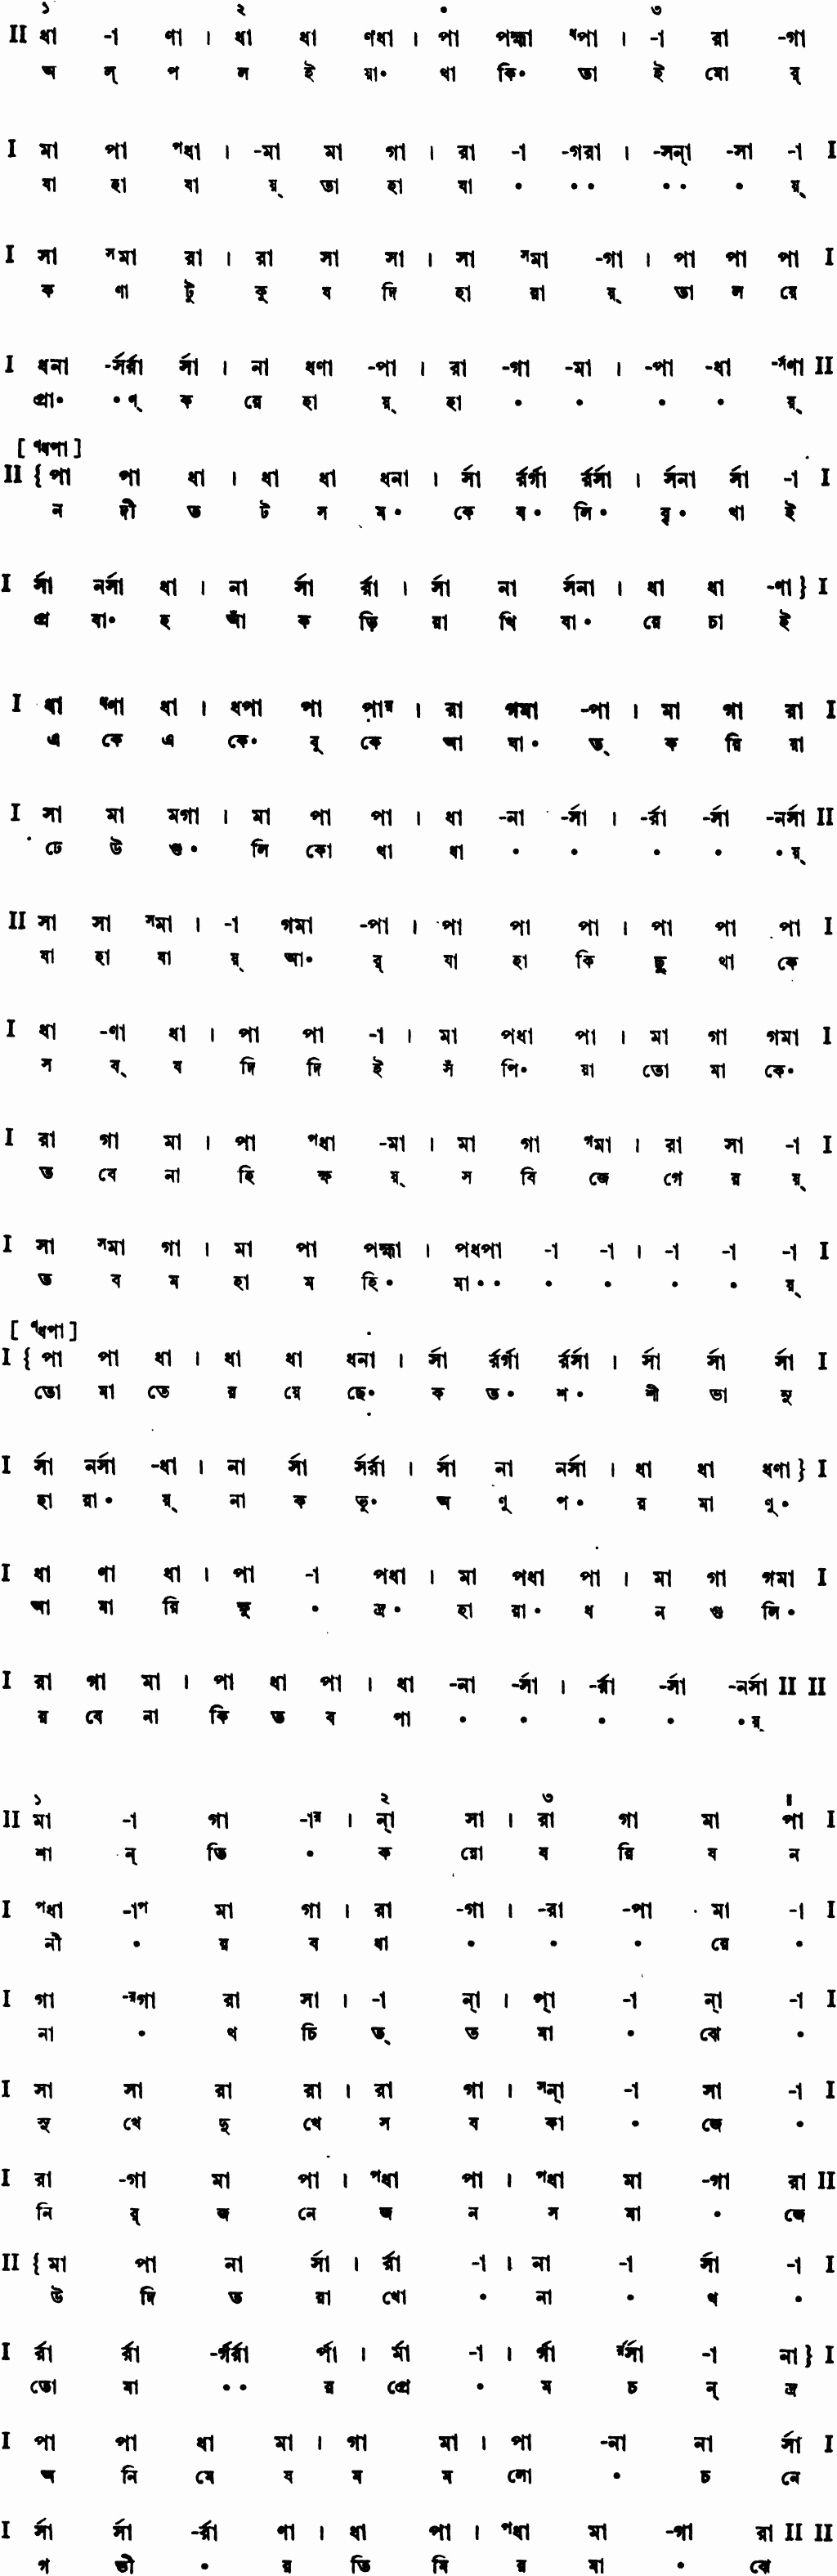 Notation alpo loiya thaki